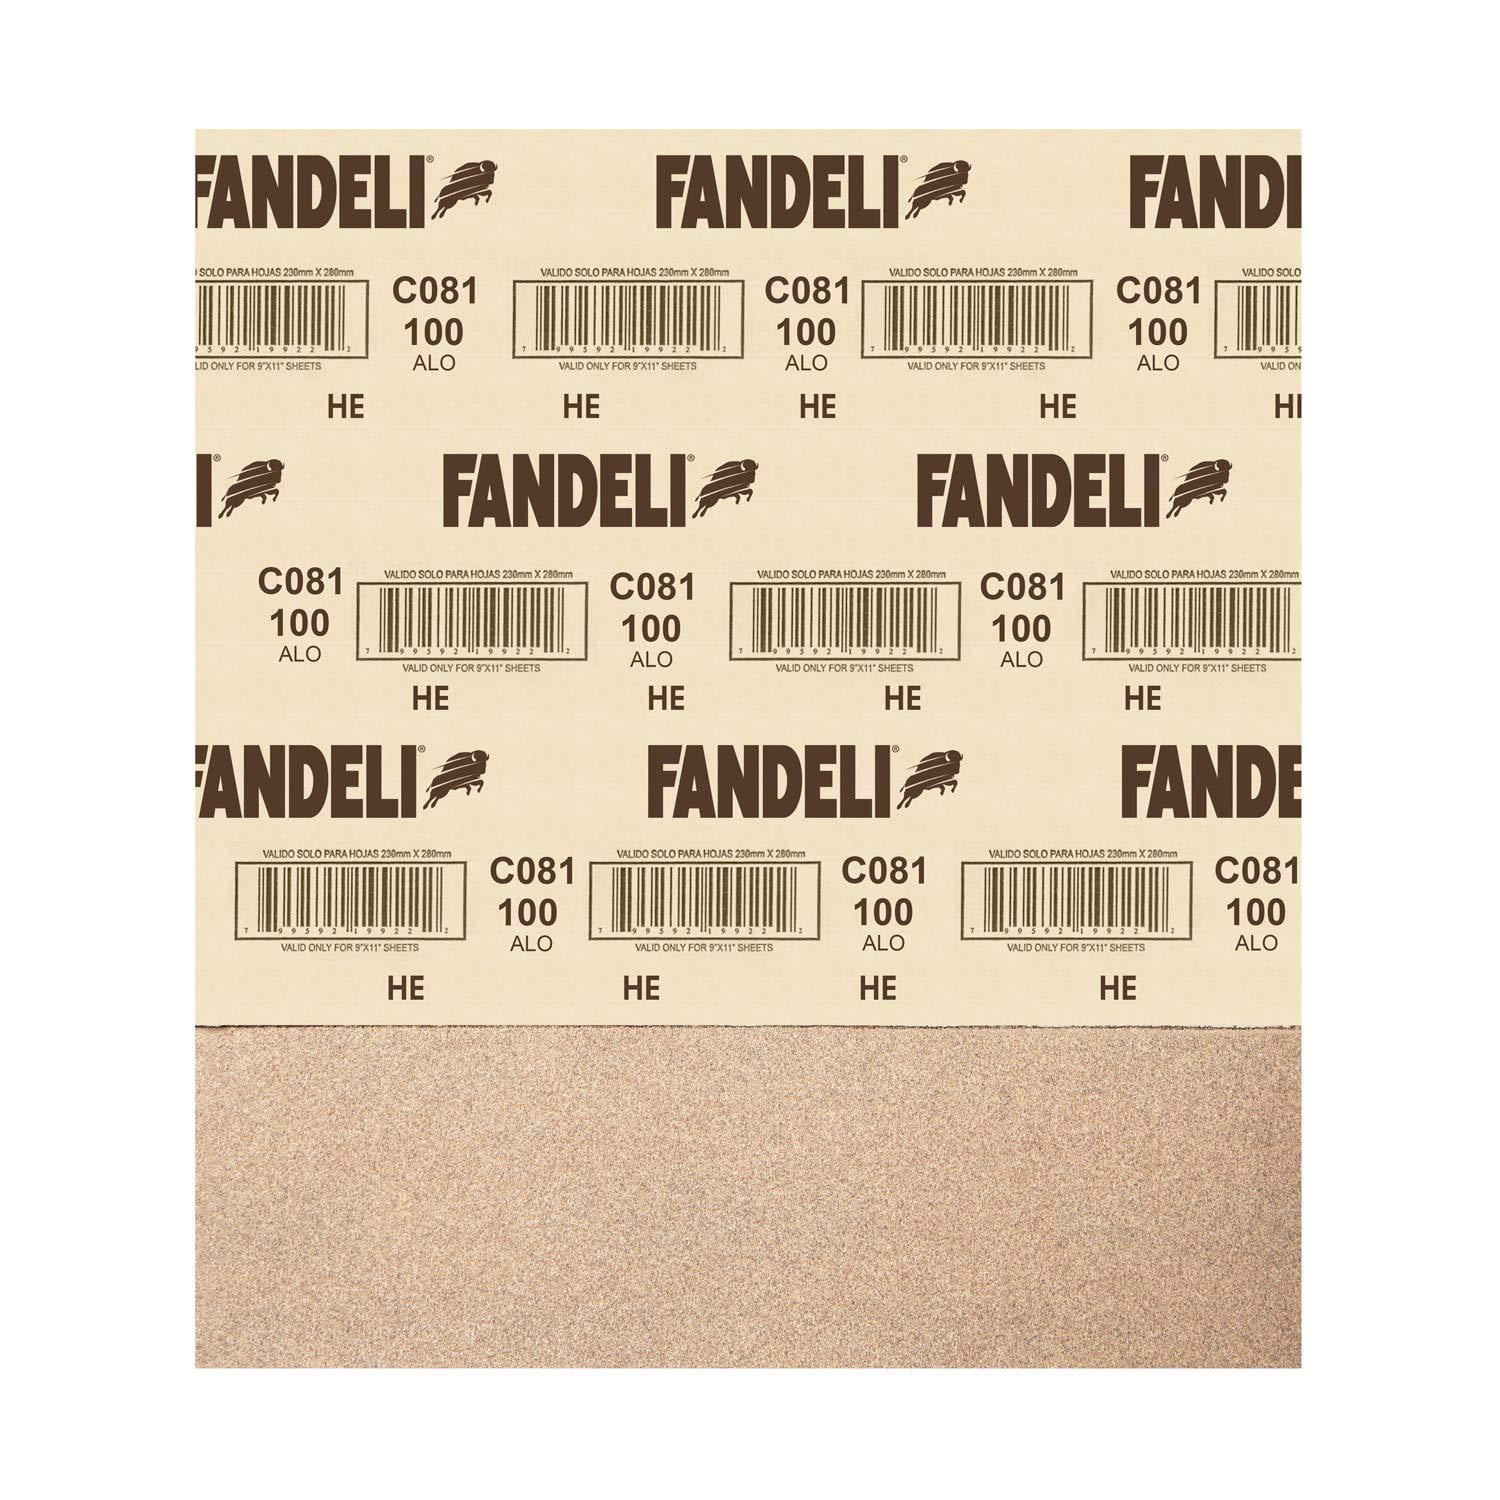 Fandeli 36025 100 Grit Multipurpose Sandpaper Sheets 25-Sheet 9  x 11 